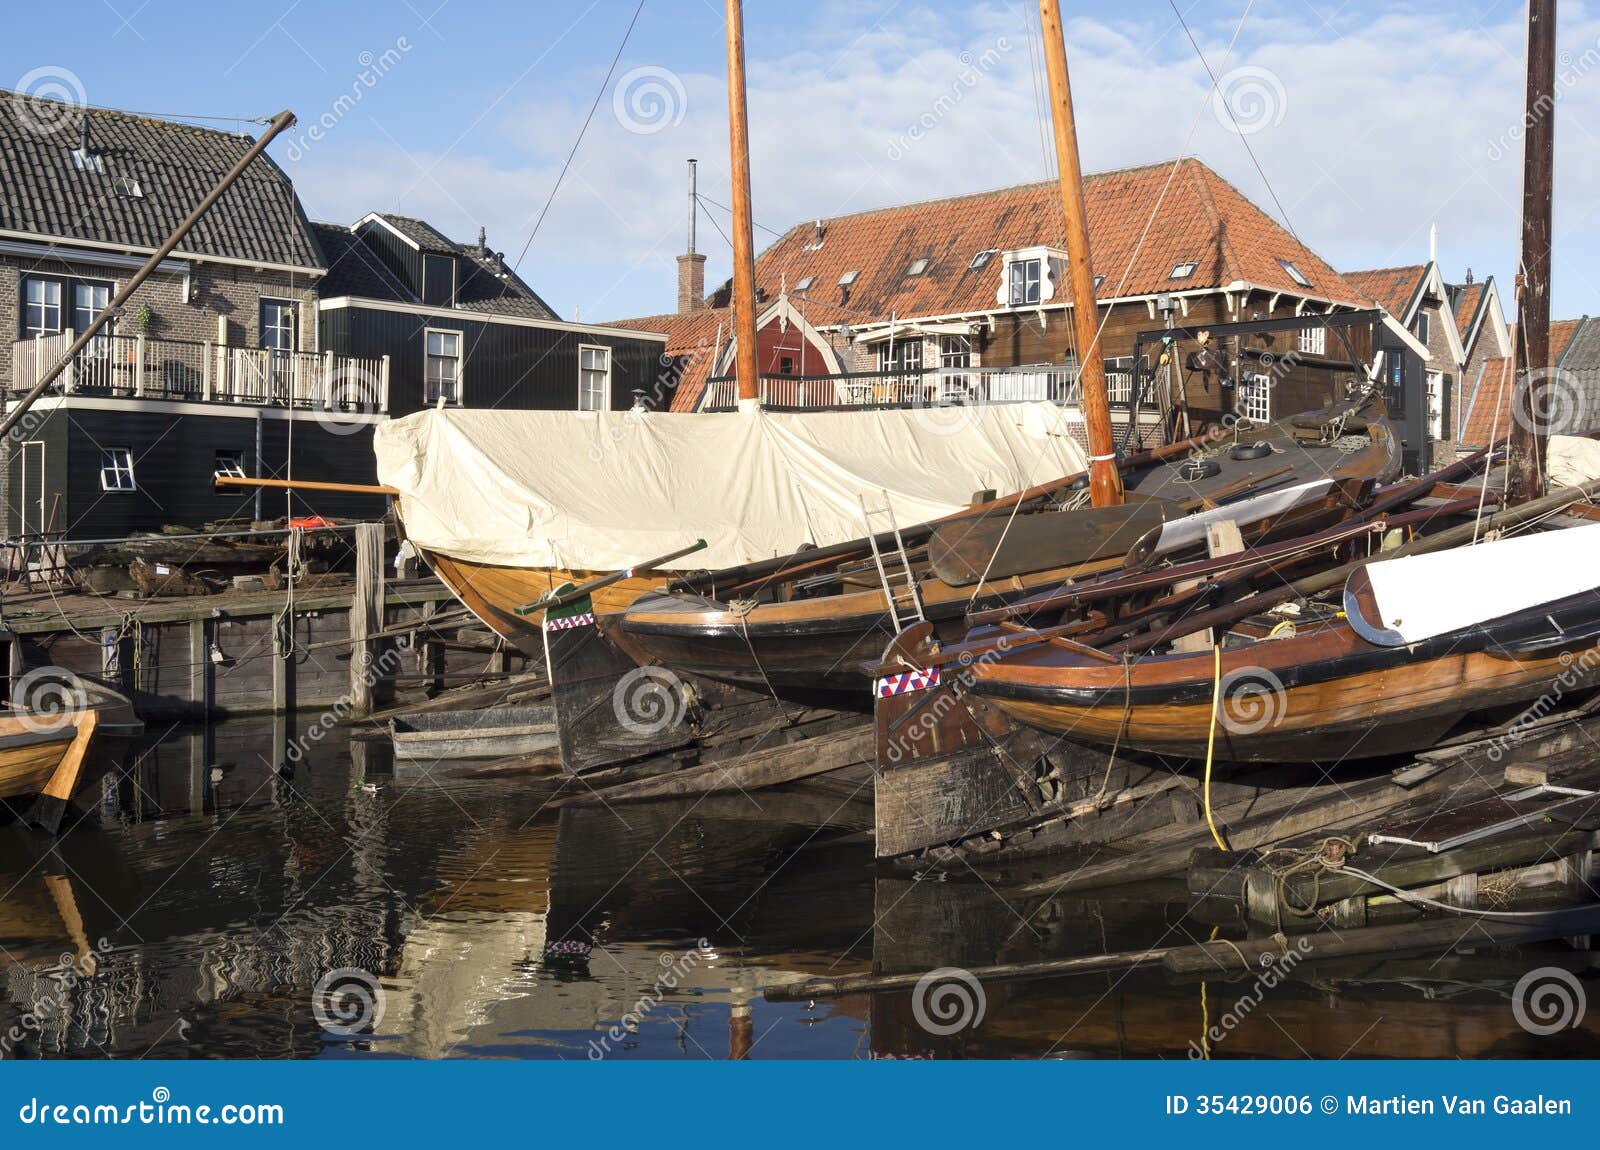 Boat Yard For Fishing Boats. Royalty Free Stock Image ...